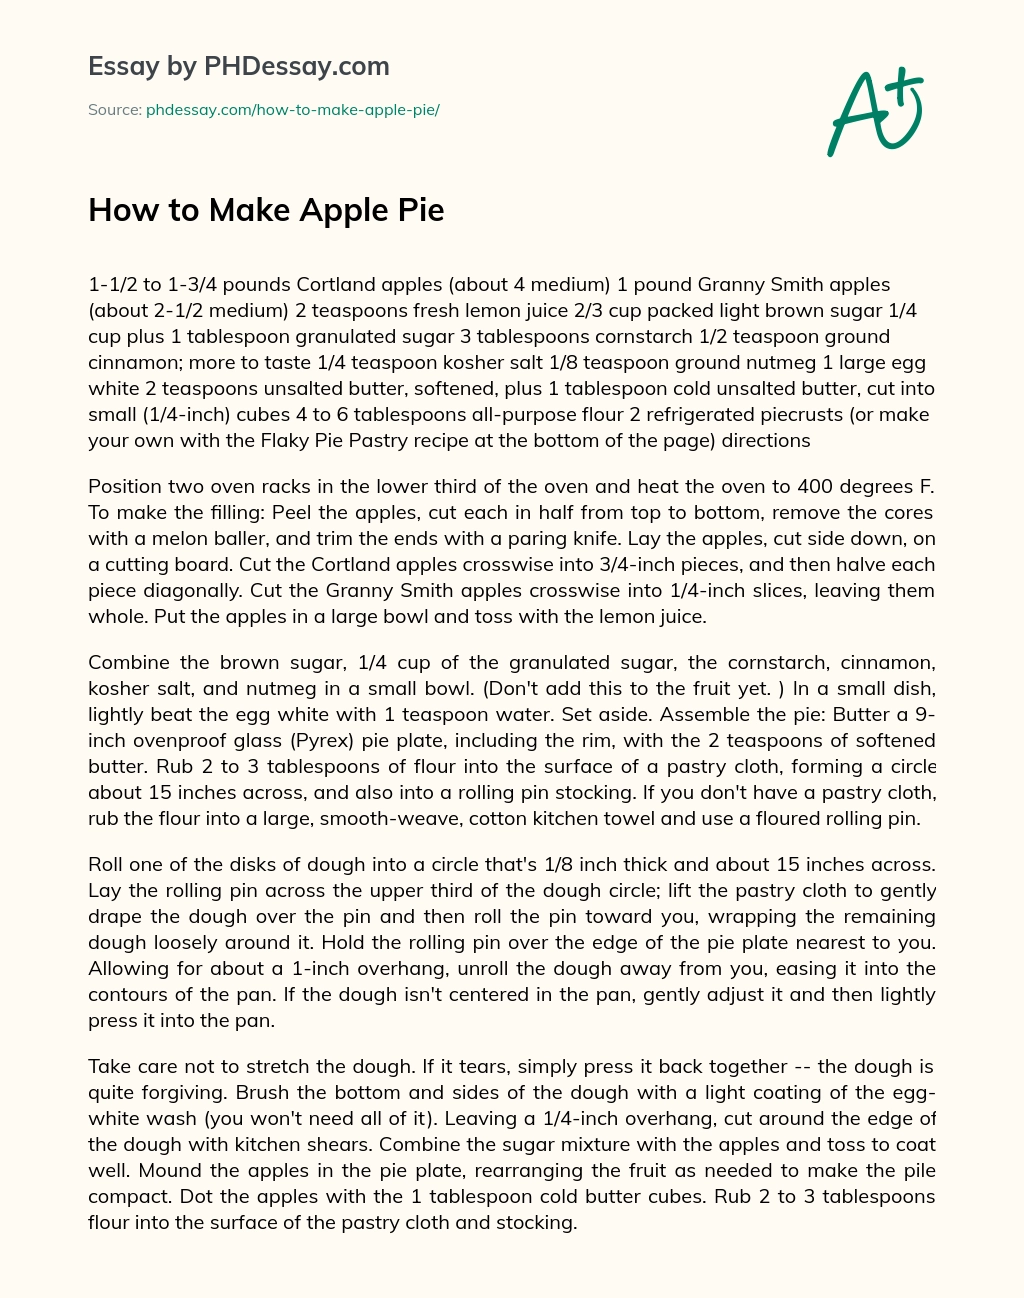 How to Make Apple Pie essay